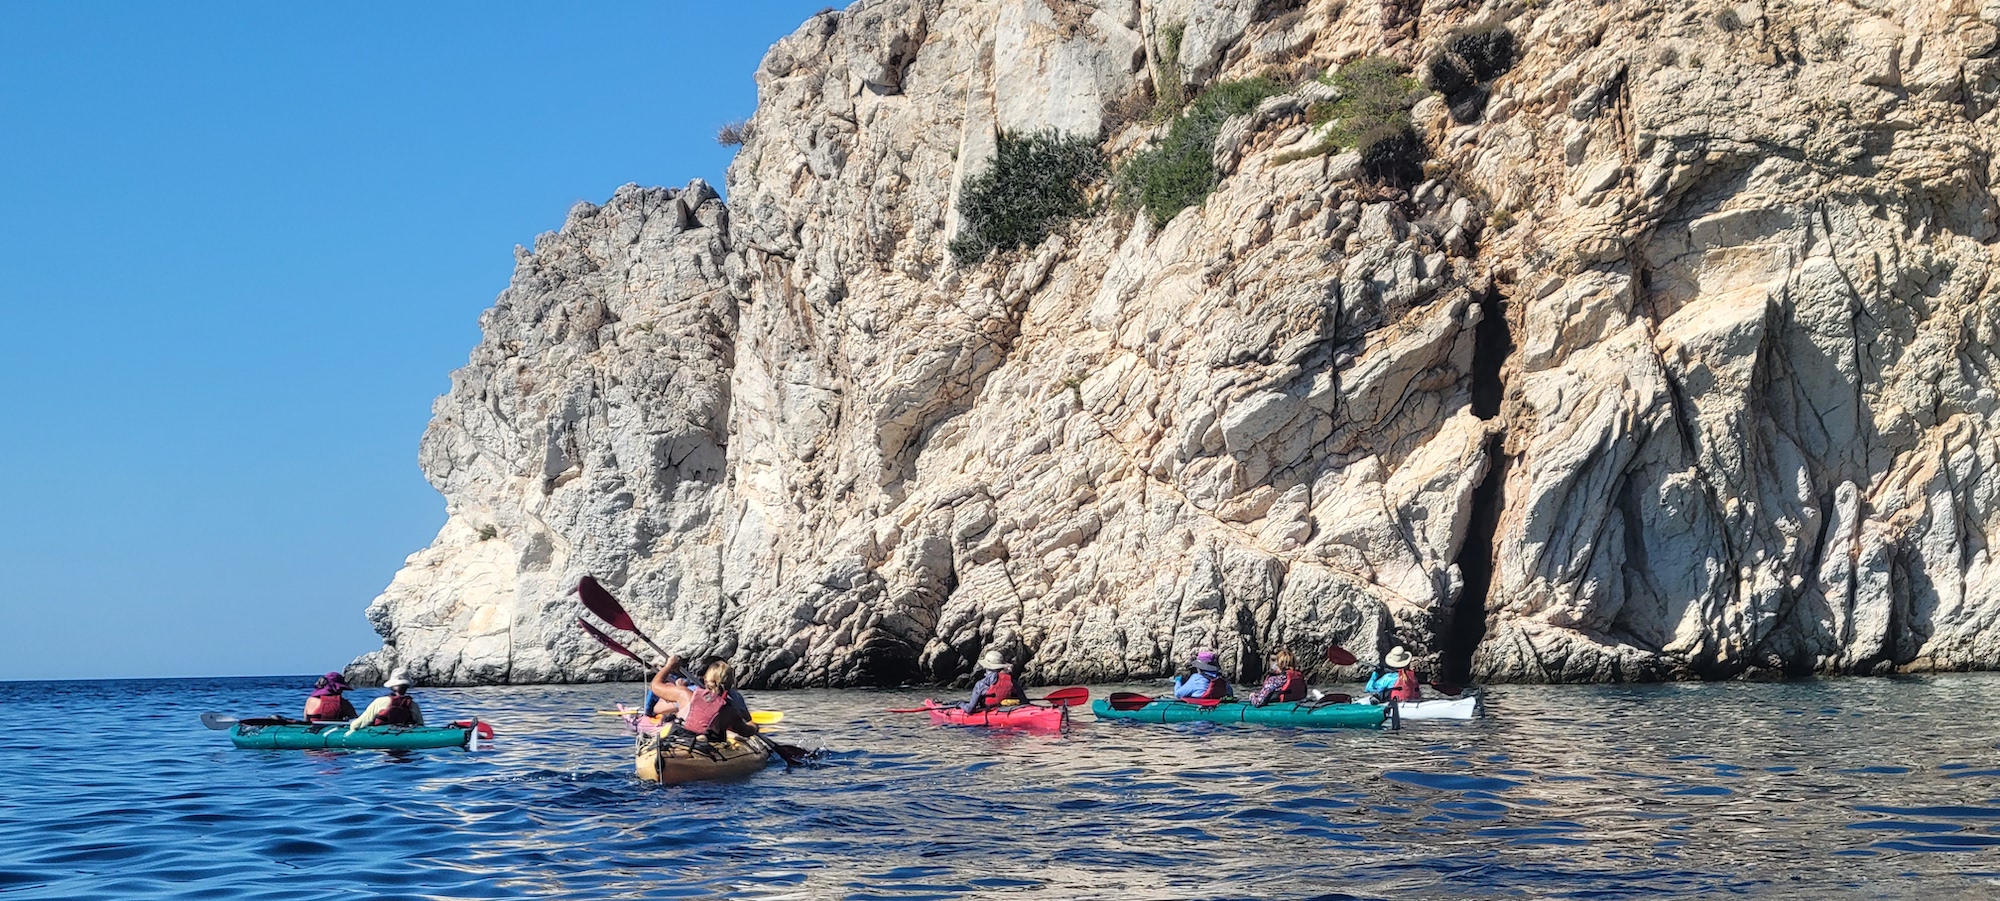 Sea kayakers paddling along the Carian Coast in Turkey